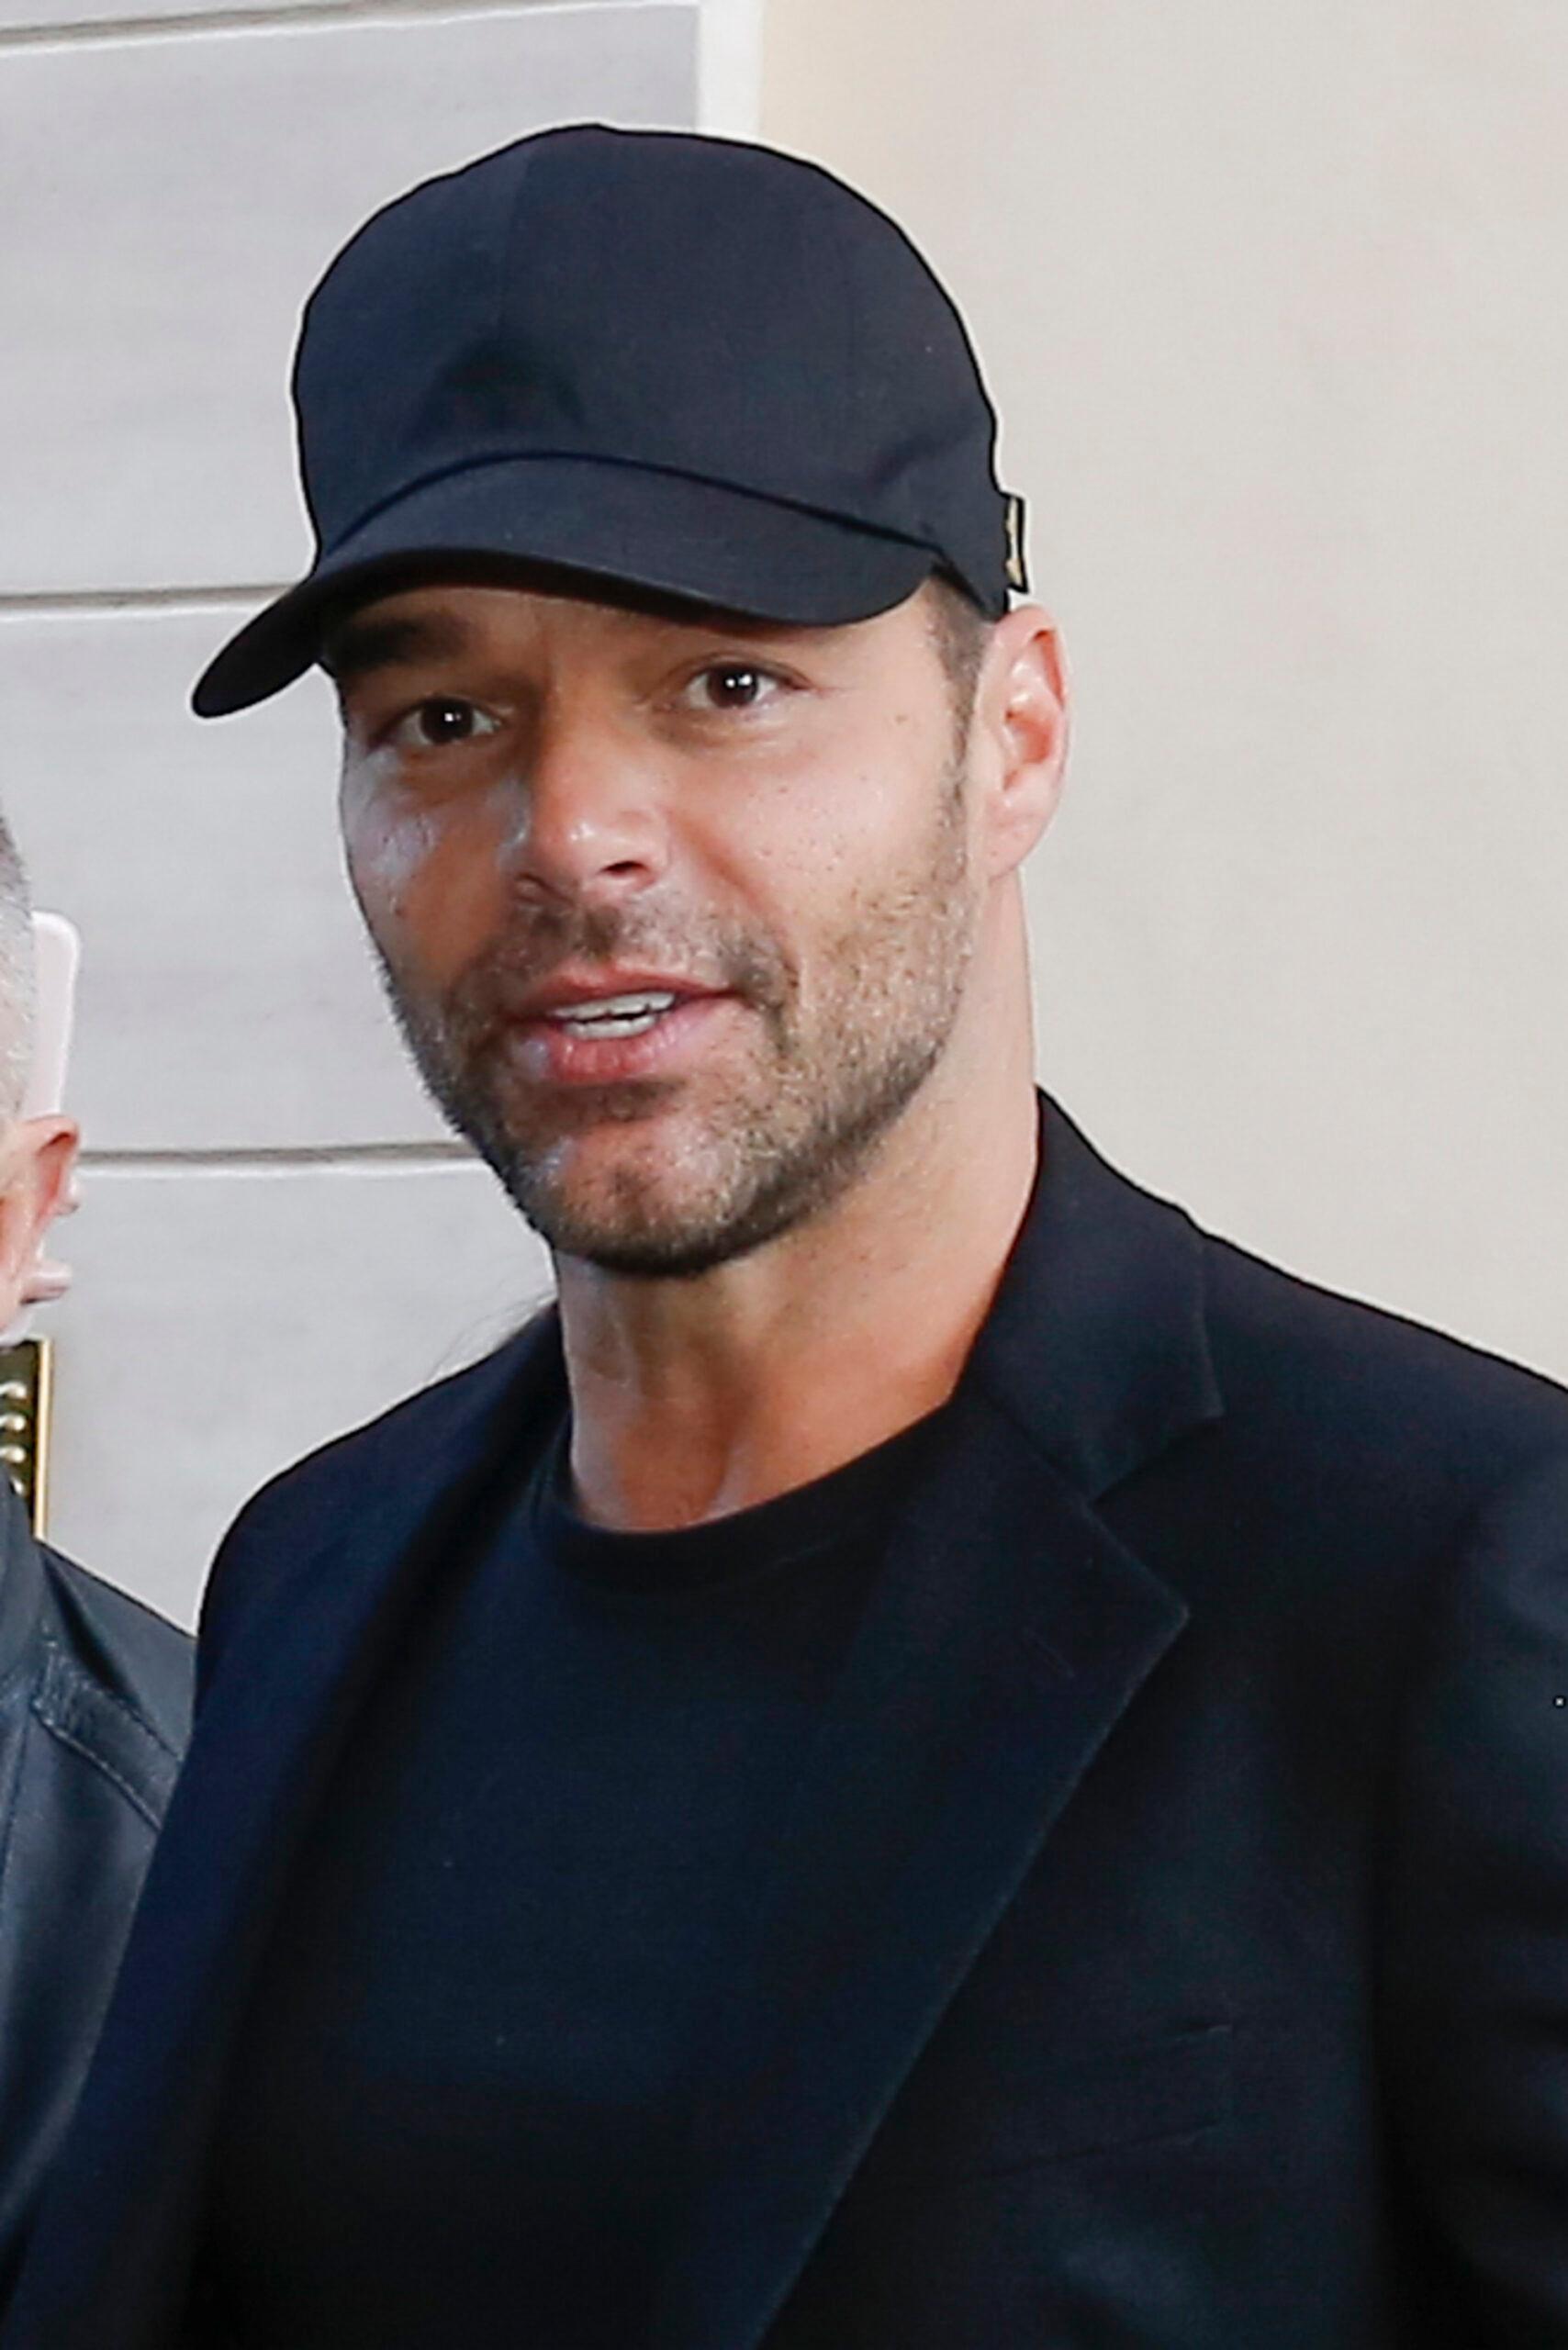 Ricky Martin leaving exhibition of his husband Jwan Josef inn Rome